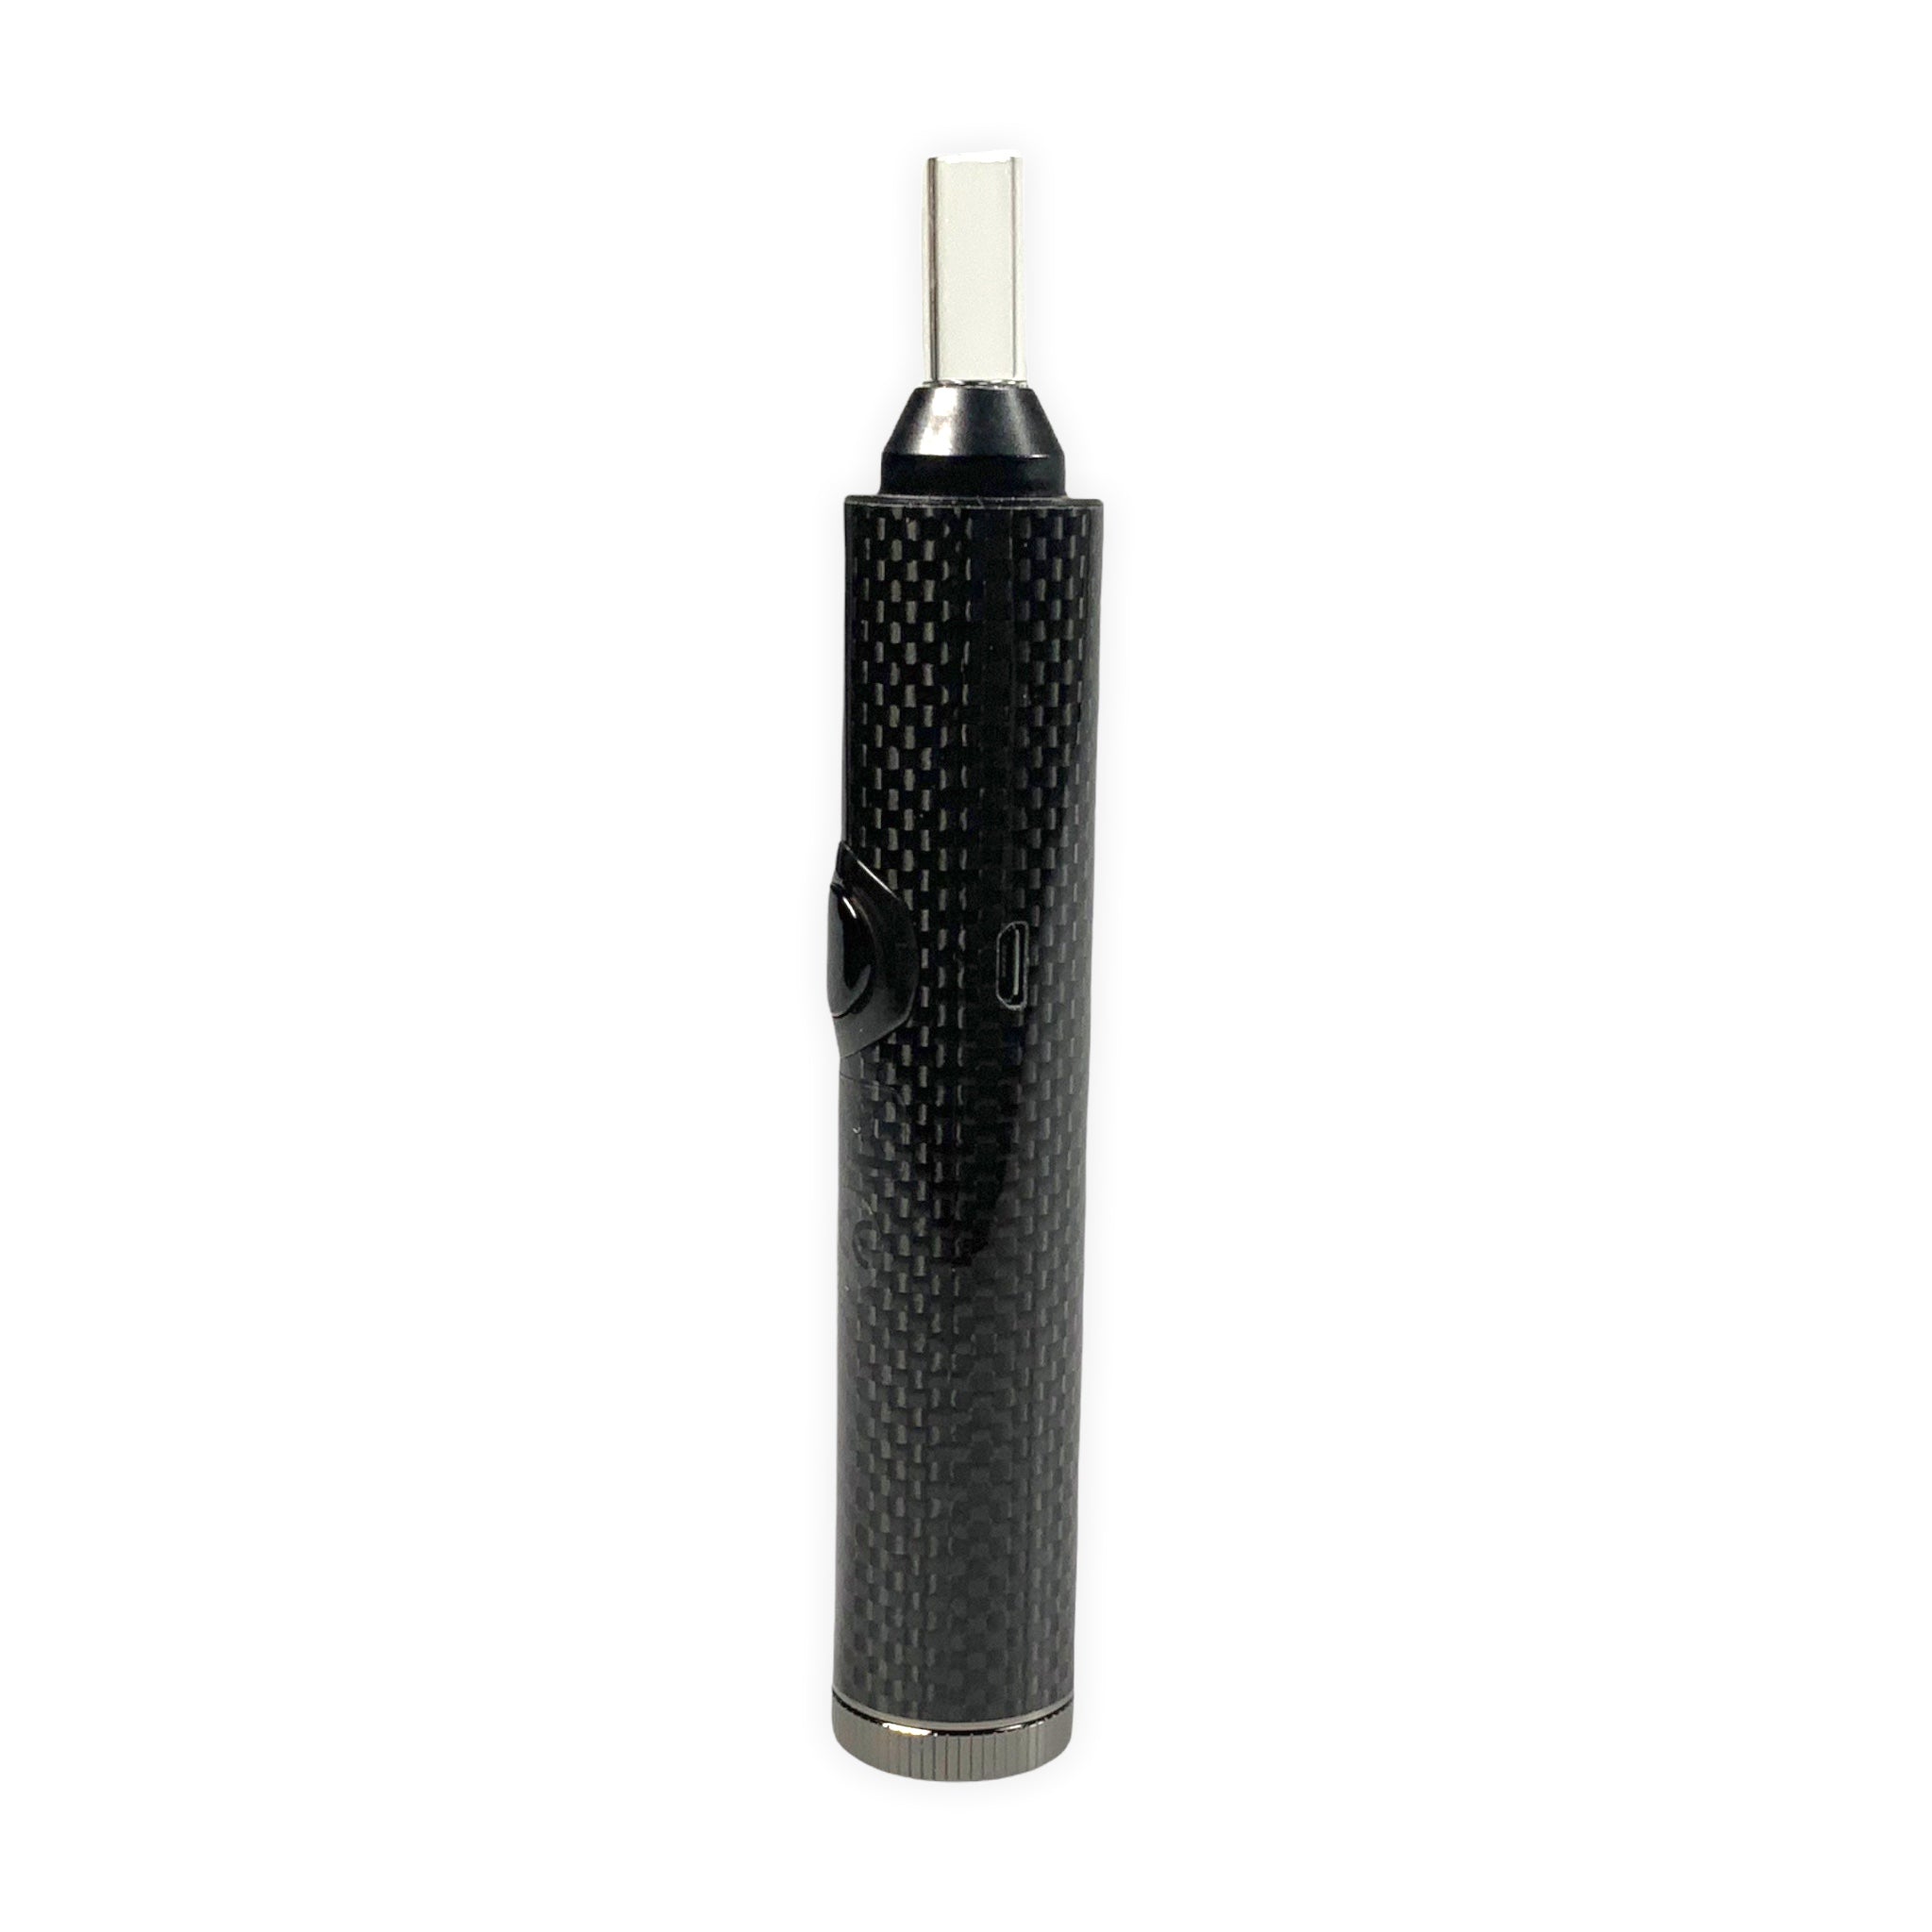 Flowermate Slick Pen vaporizer mit Glasmundstück B-Ware